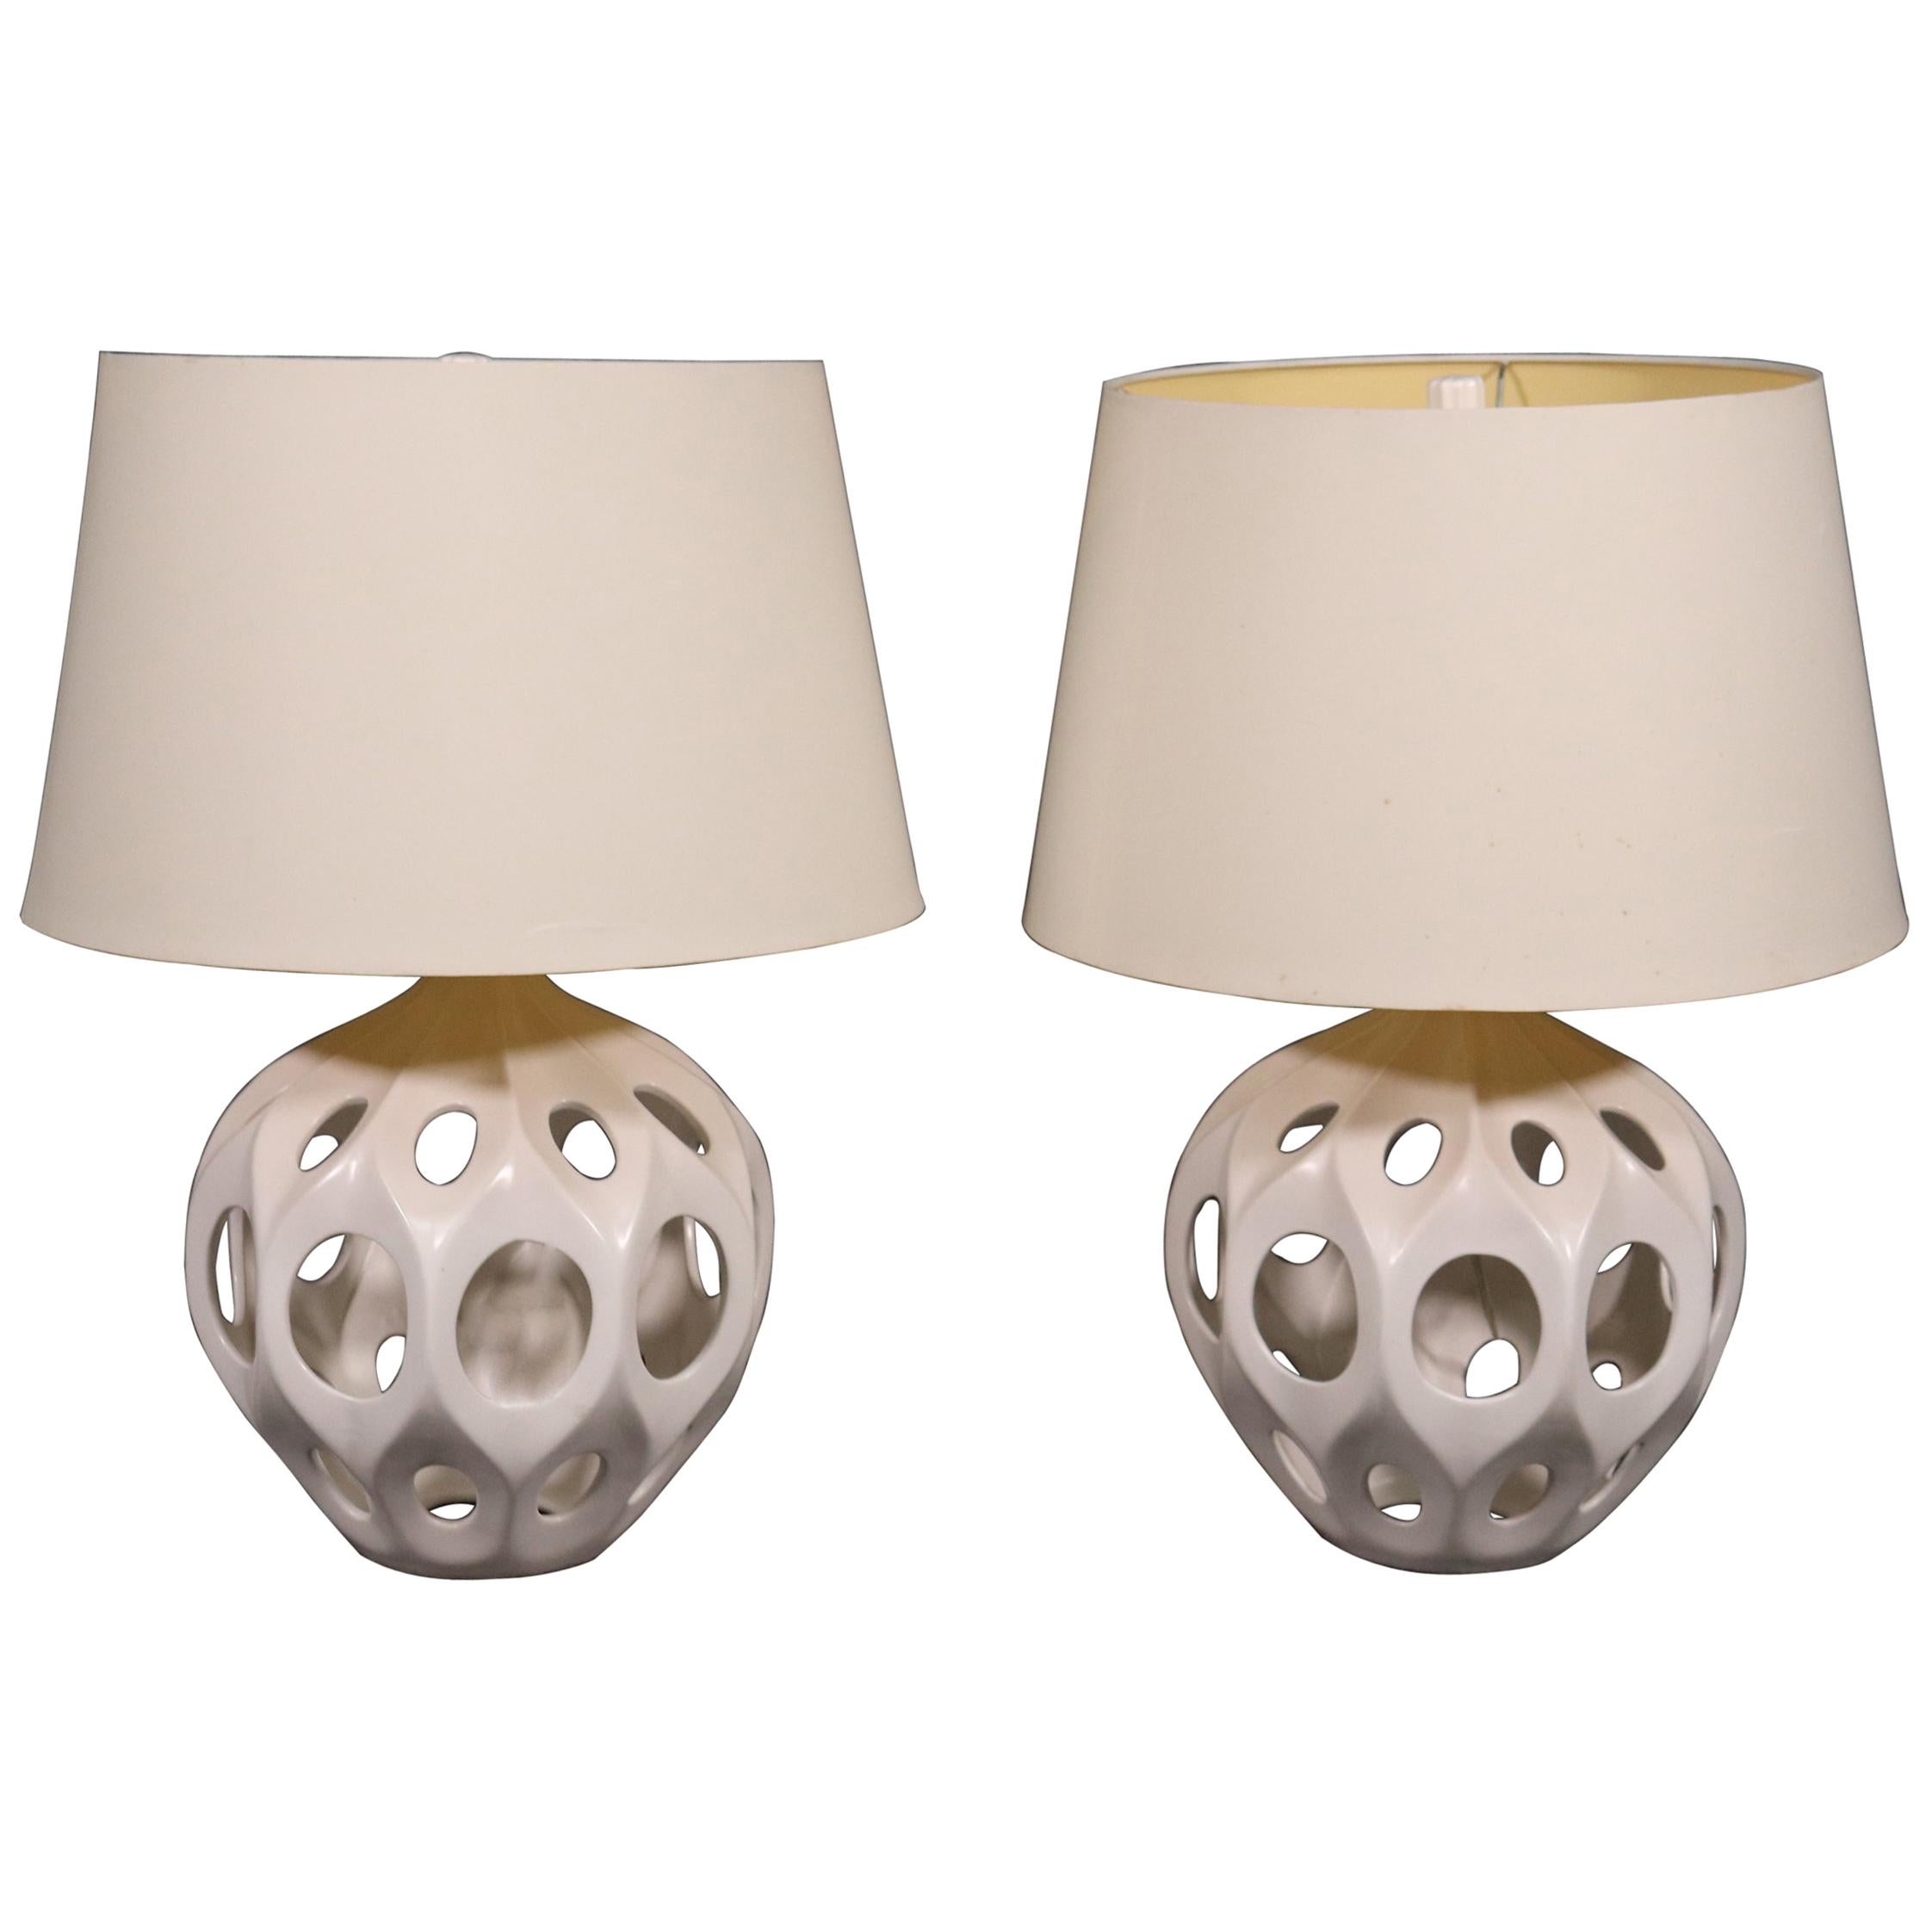 Pair of Decorative Ceramic Mid-Century Modern Geometric Table Lamps